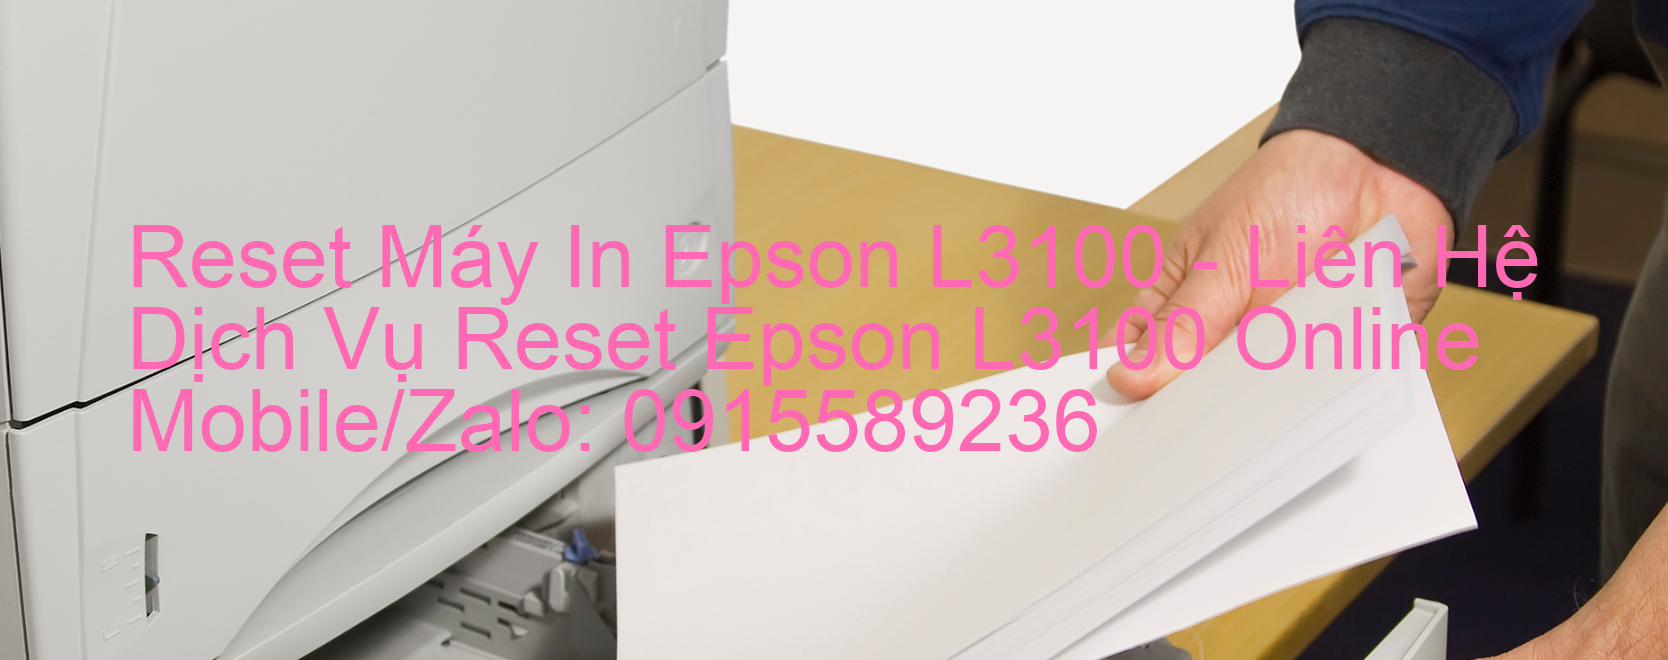 Reset Máy In Epson L3100 Online